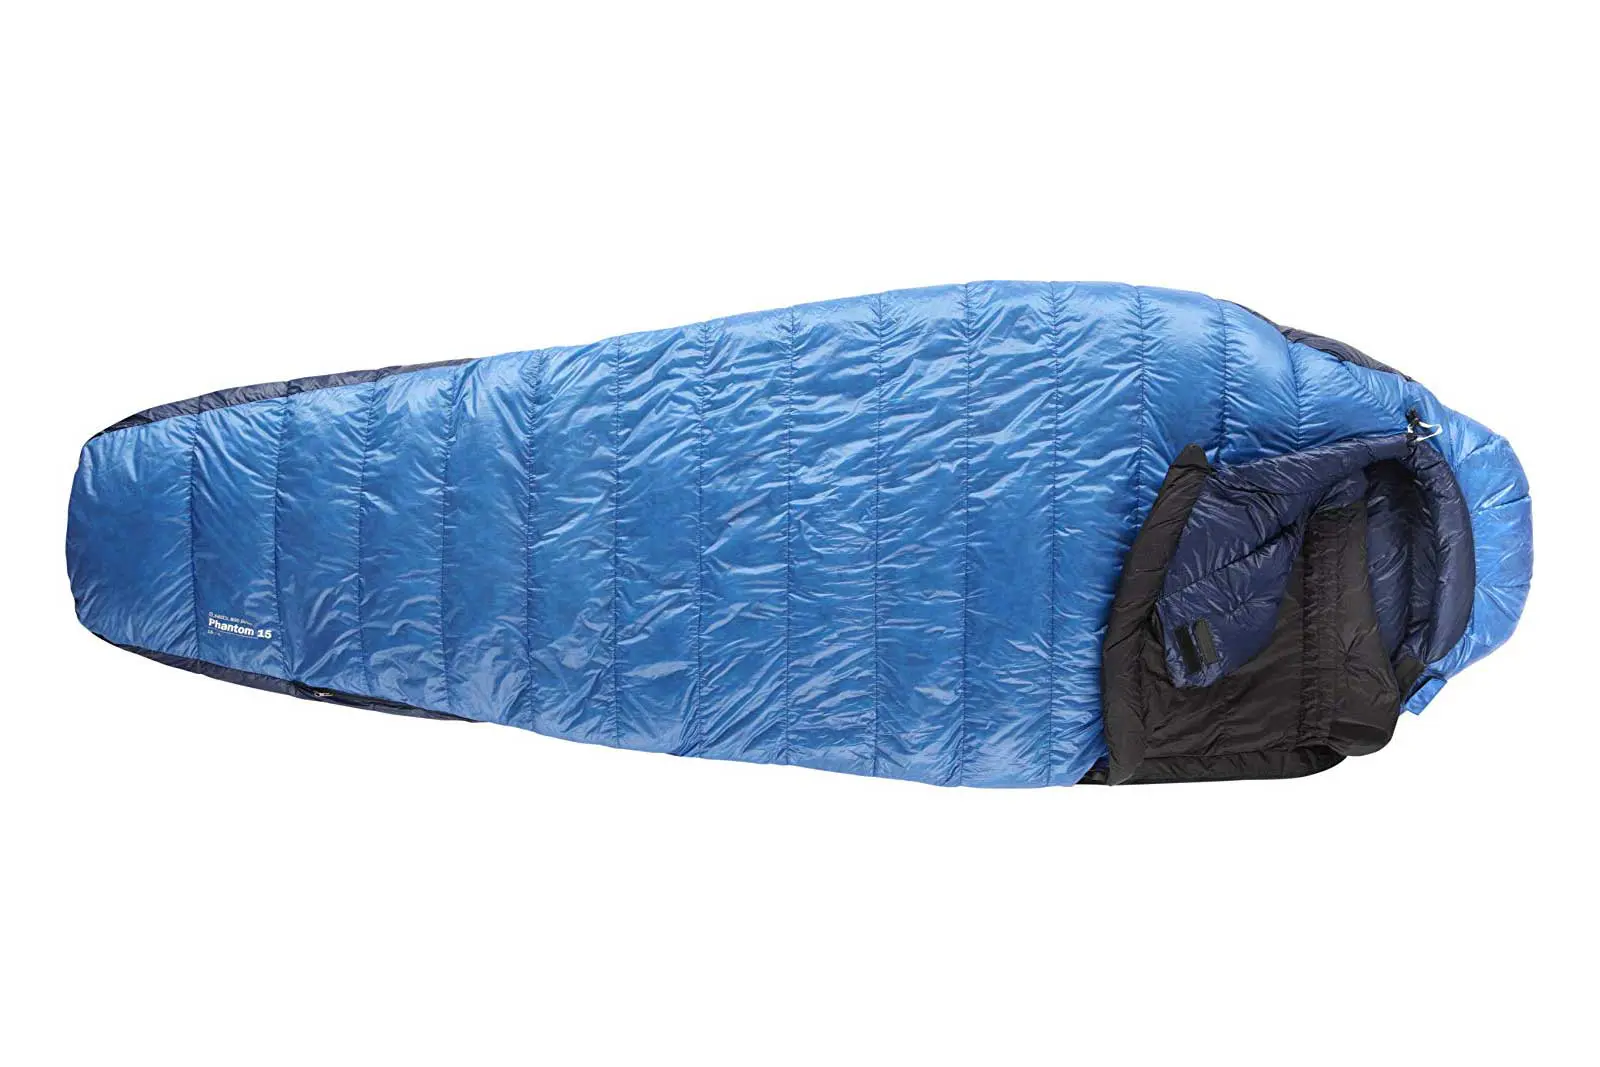 Haiku slim Premier Mountain Hardwear Phantom 15 Sleeping Bag Review | Halfway Anywhere